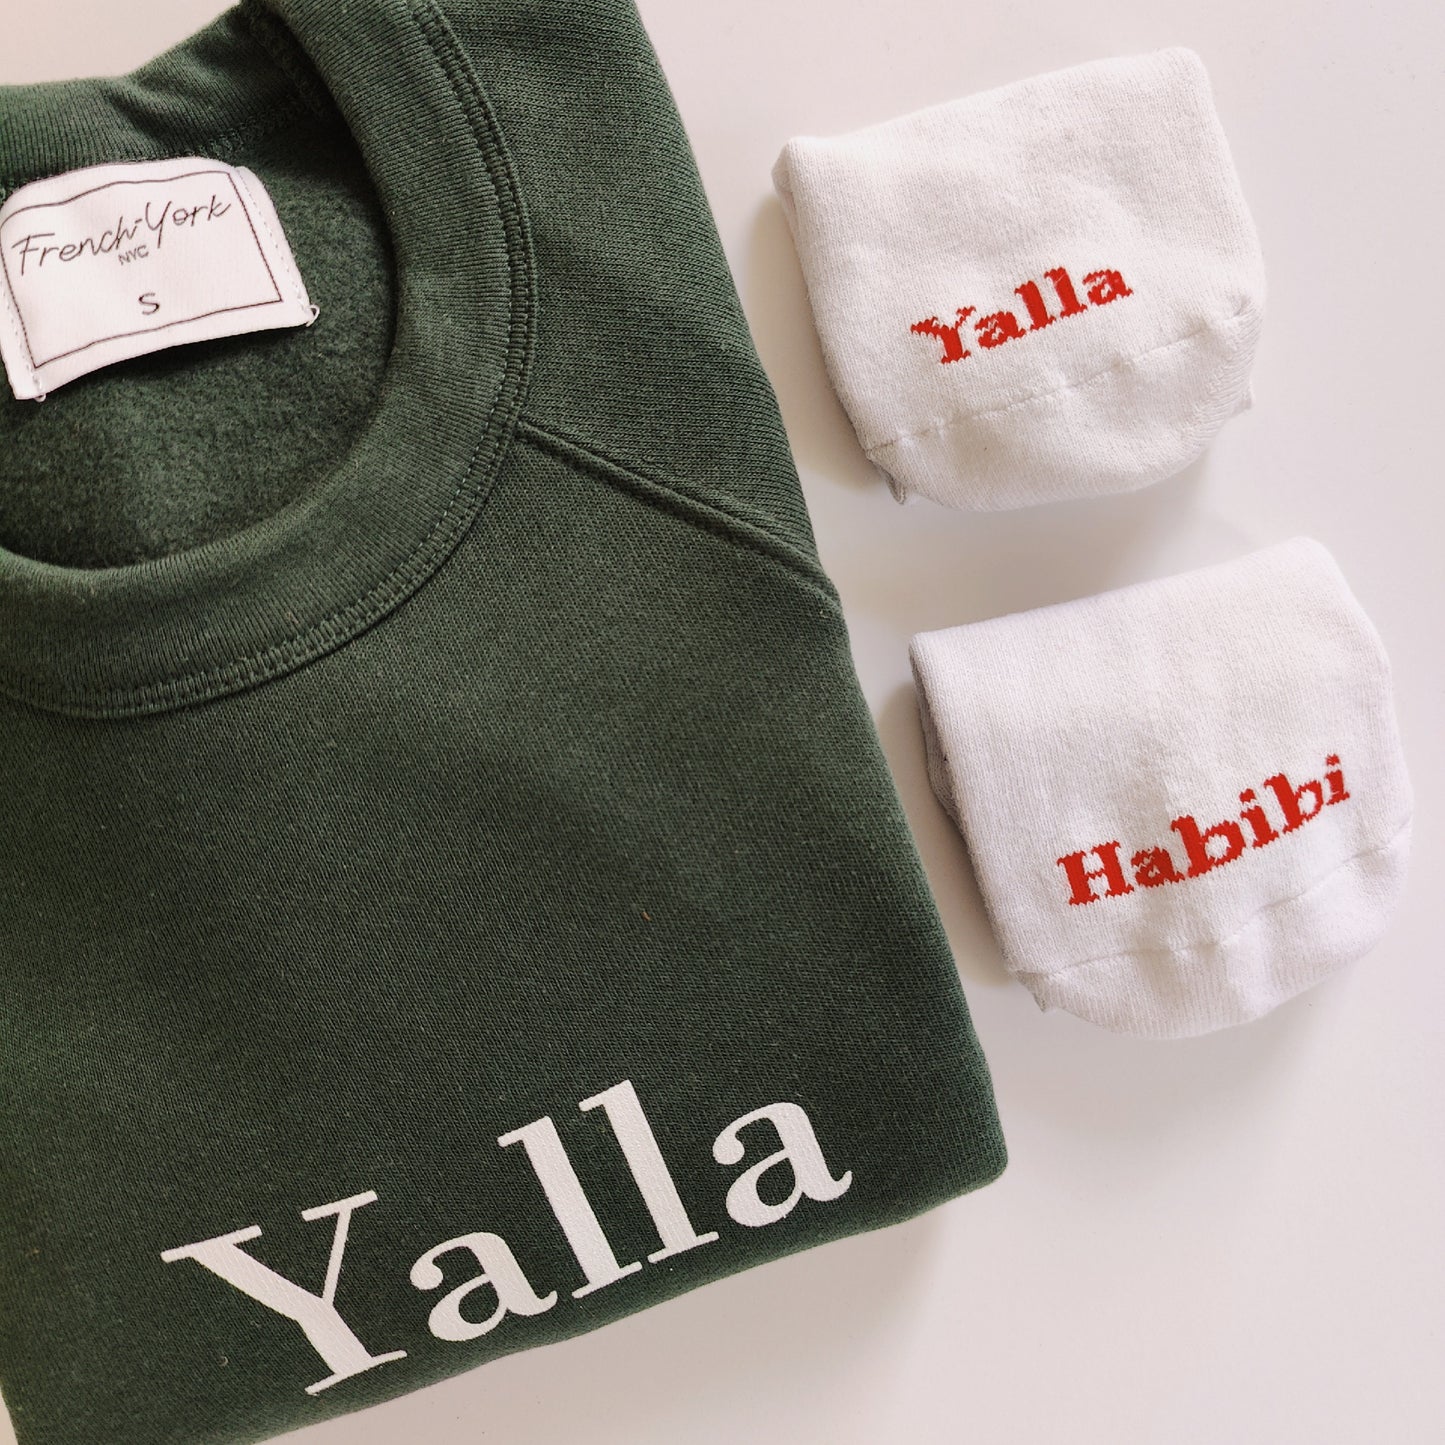 Yalla Sweater Wom(men)